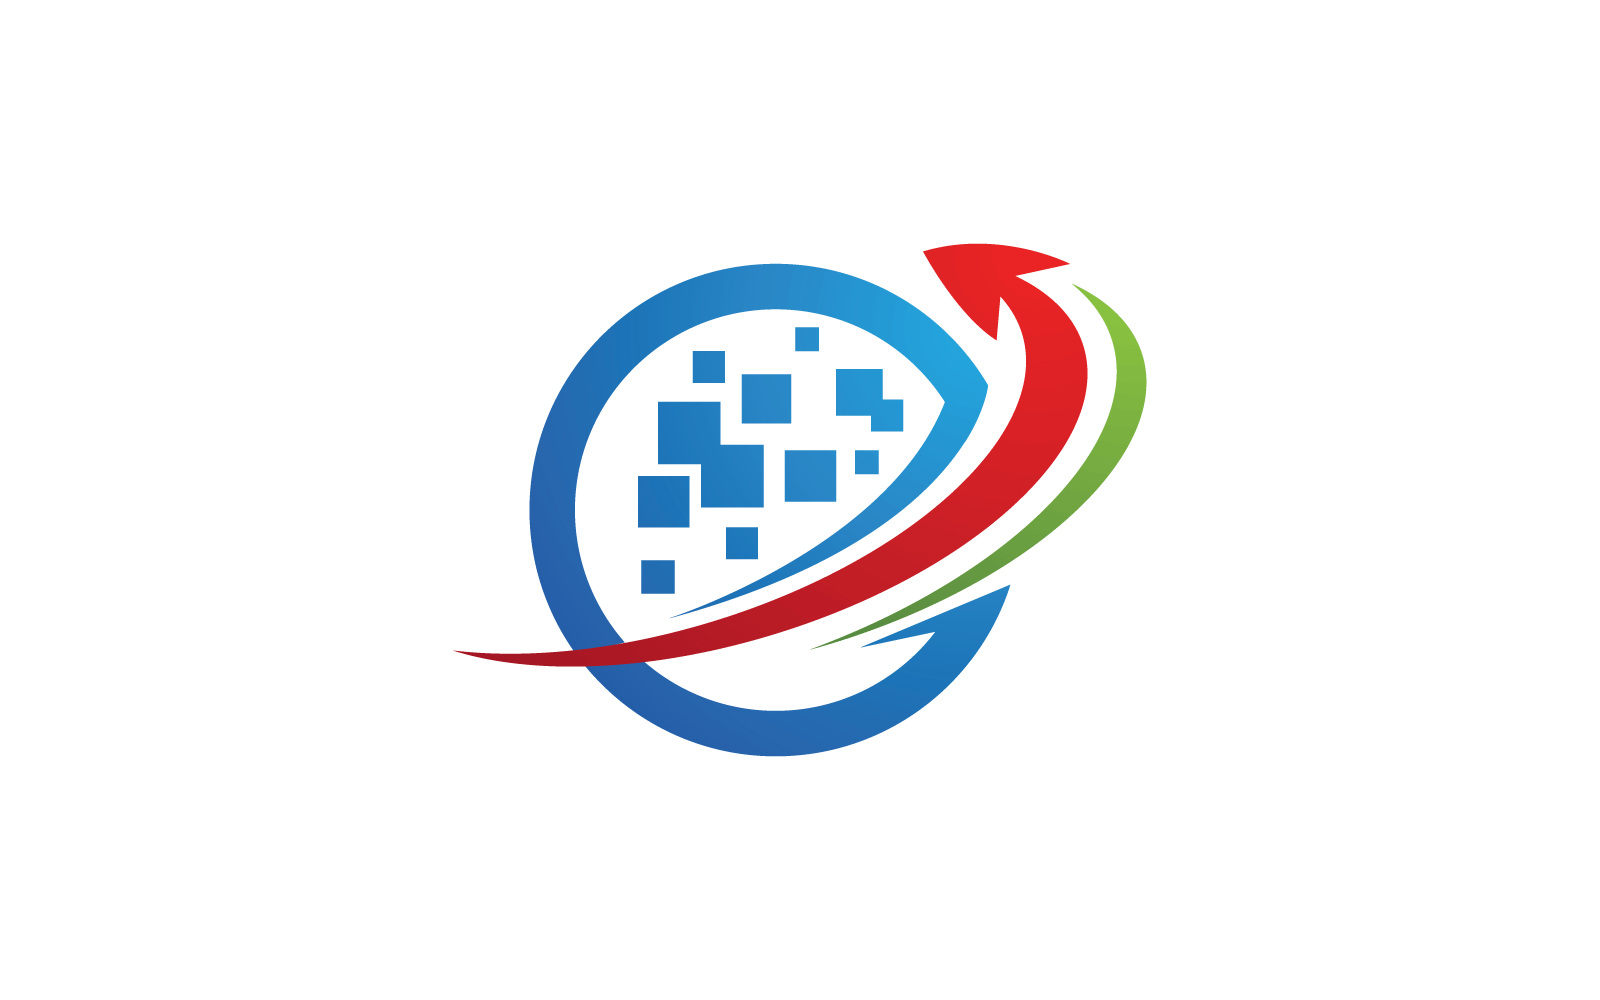 Global technology design logo illustration template